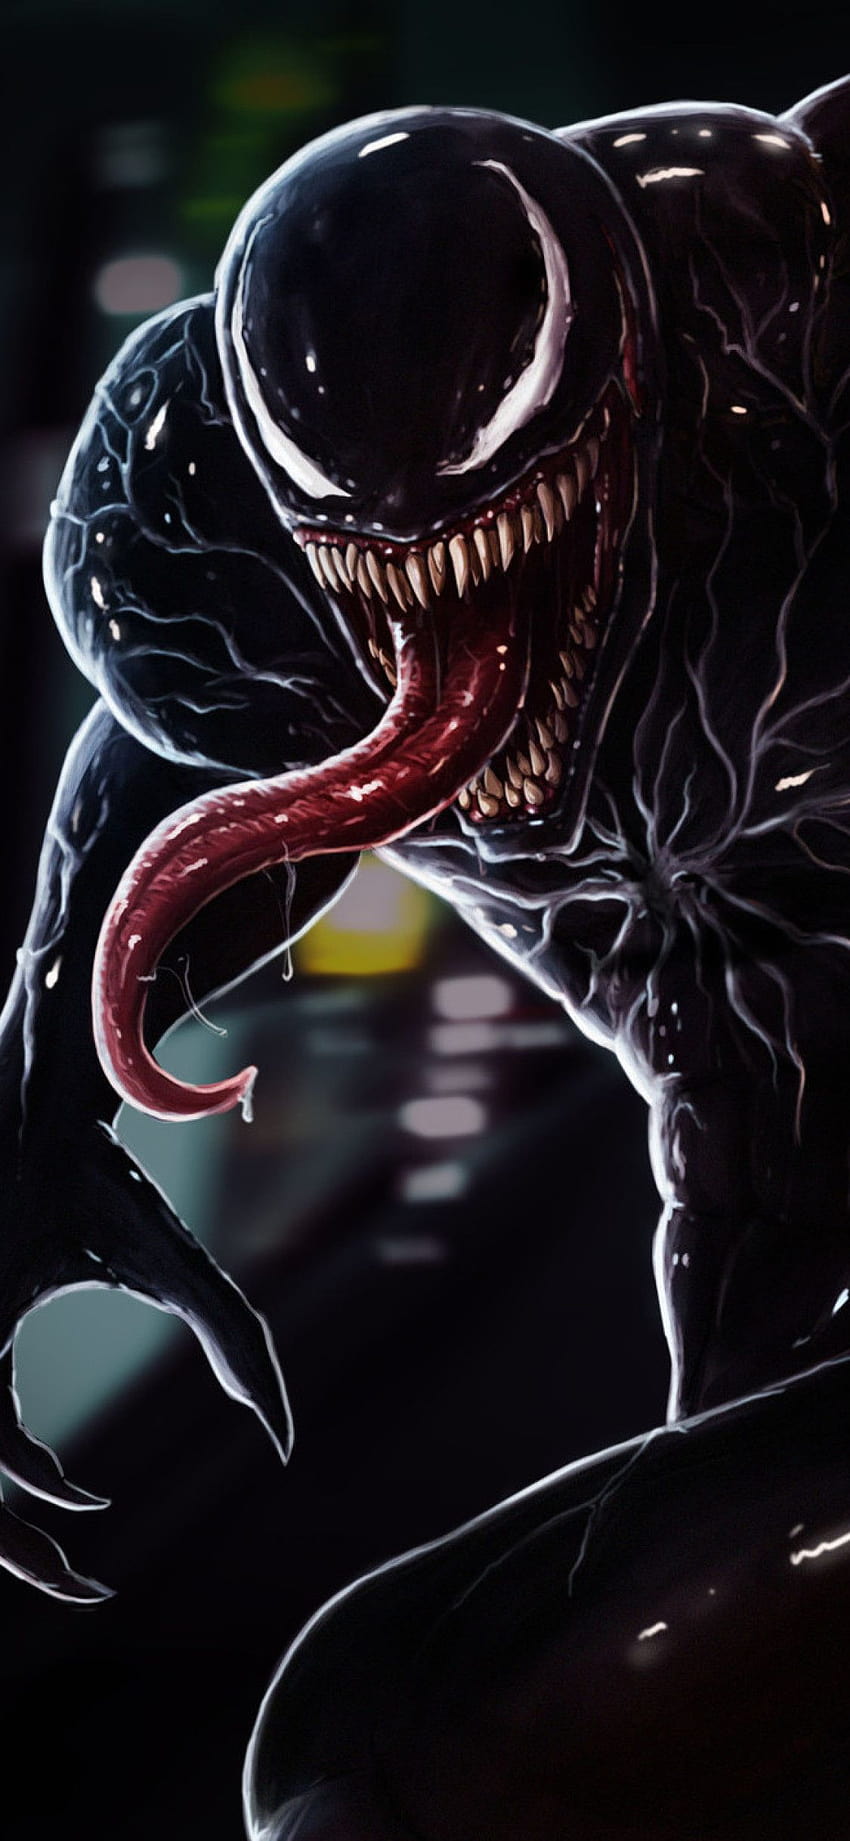 Download wallpaper 1280x2120 minimal venom supervillain artwork iphone 6  plus 1280x2120 hd background 18990